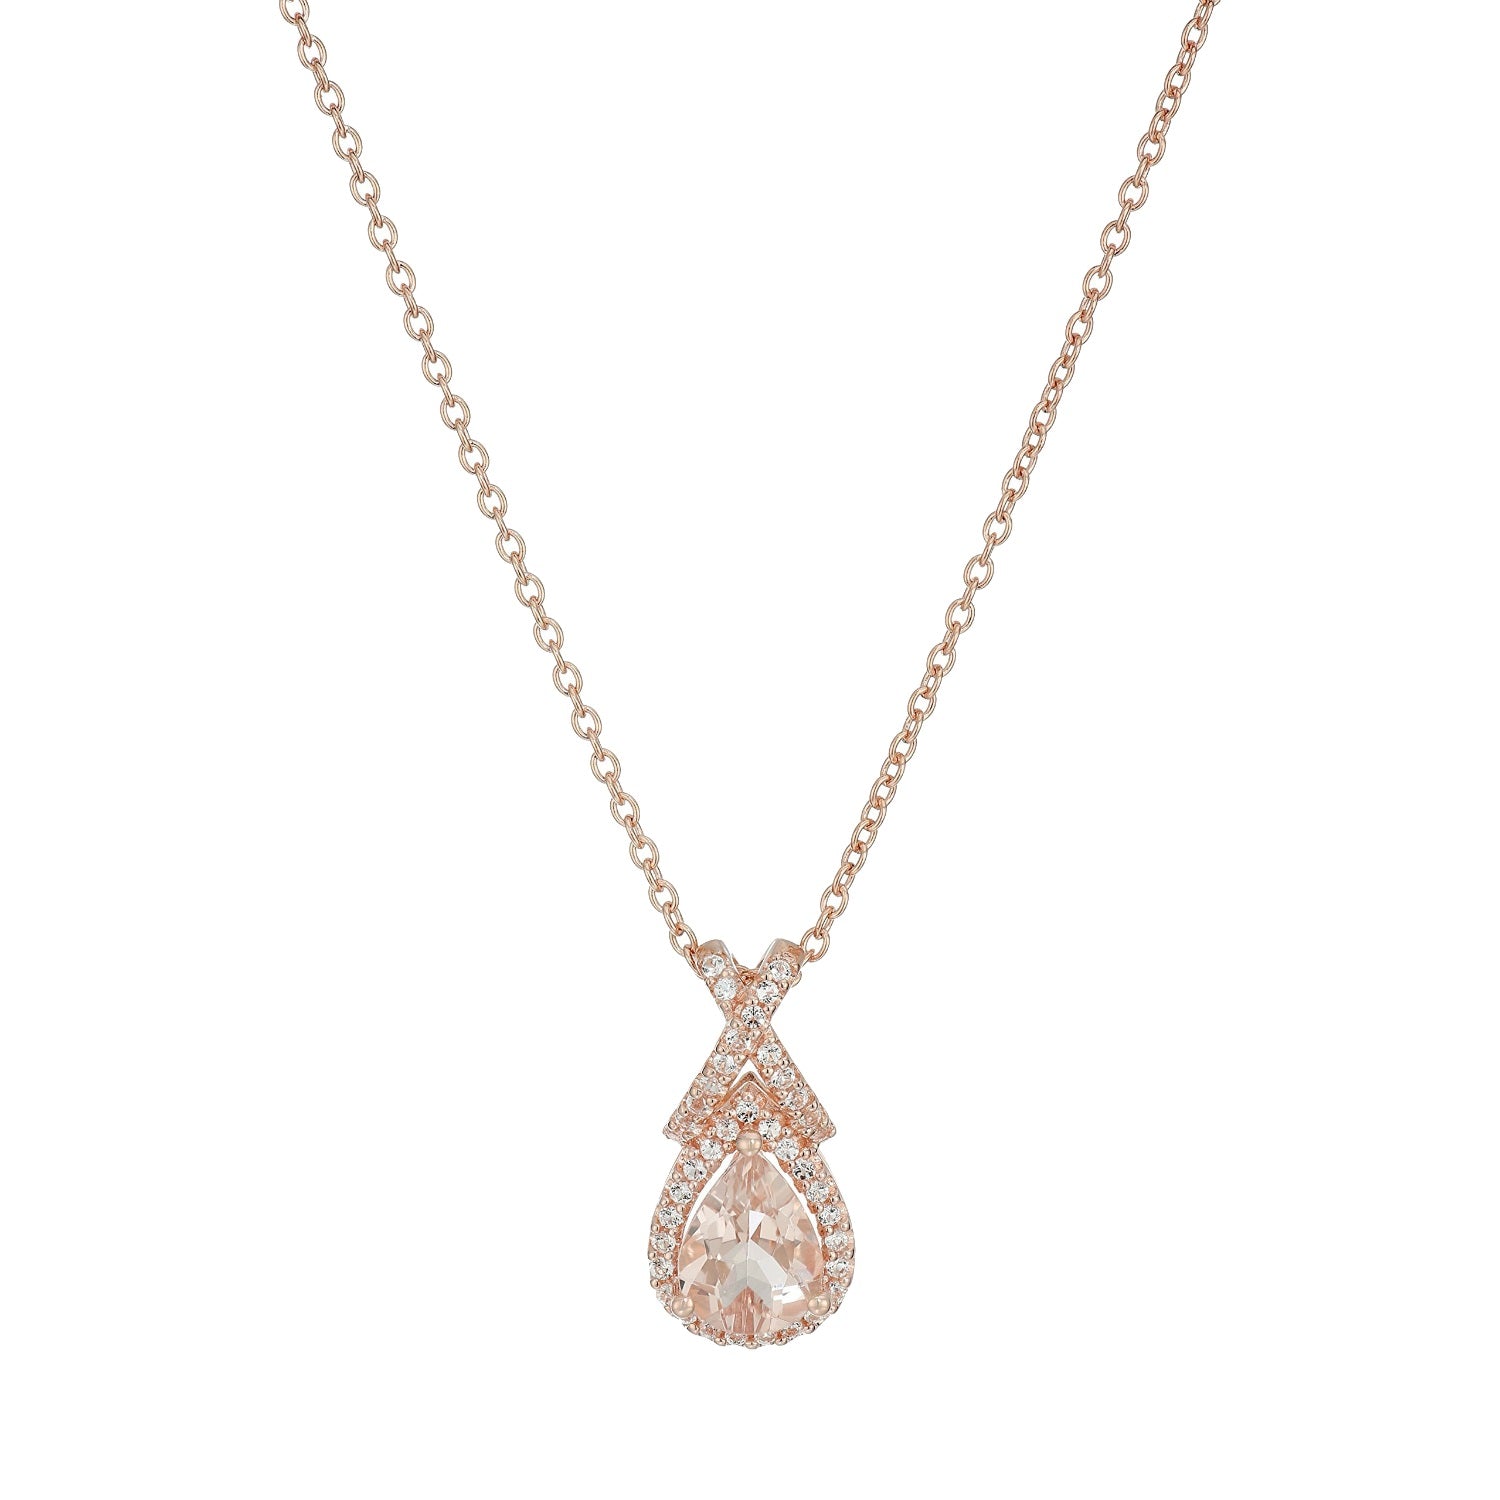 Rose Gold-plated Silver Morganite & White Topaz Pendant Necklace, 18" - peach - Pinctore